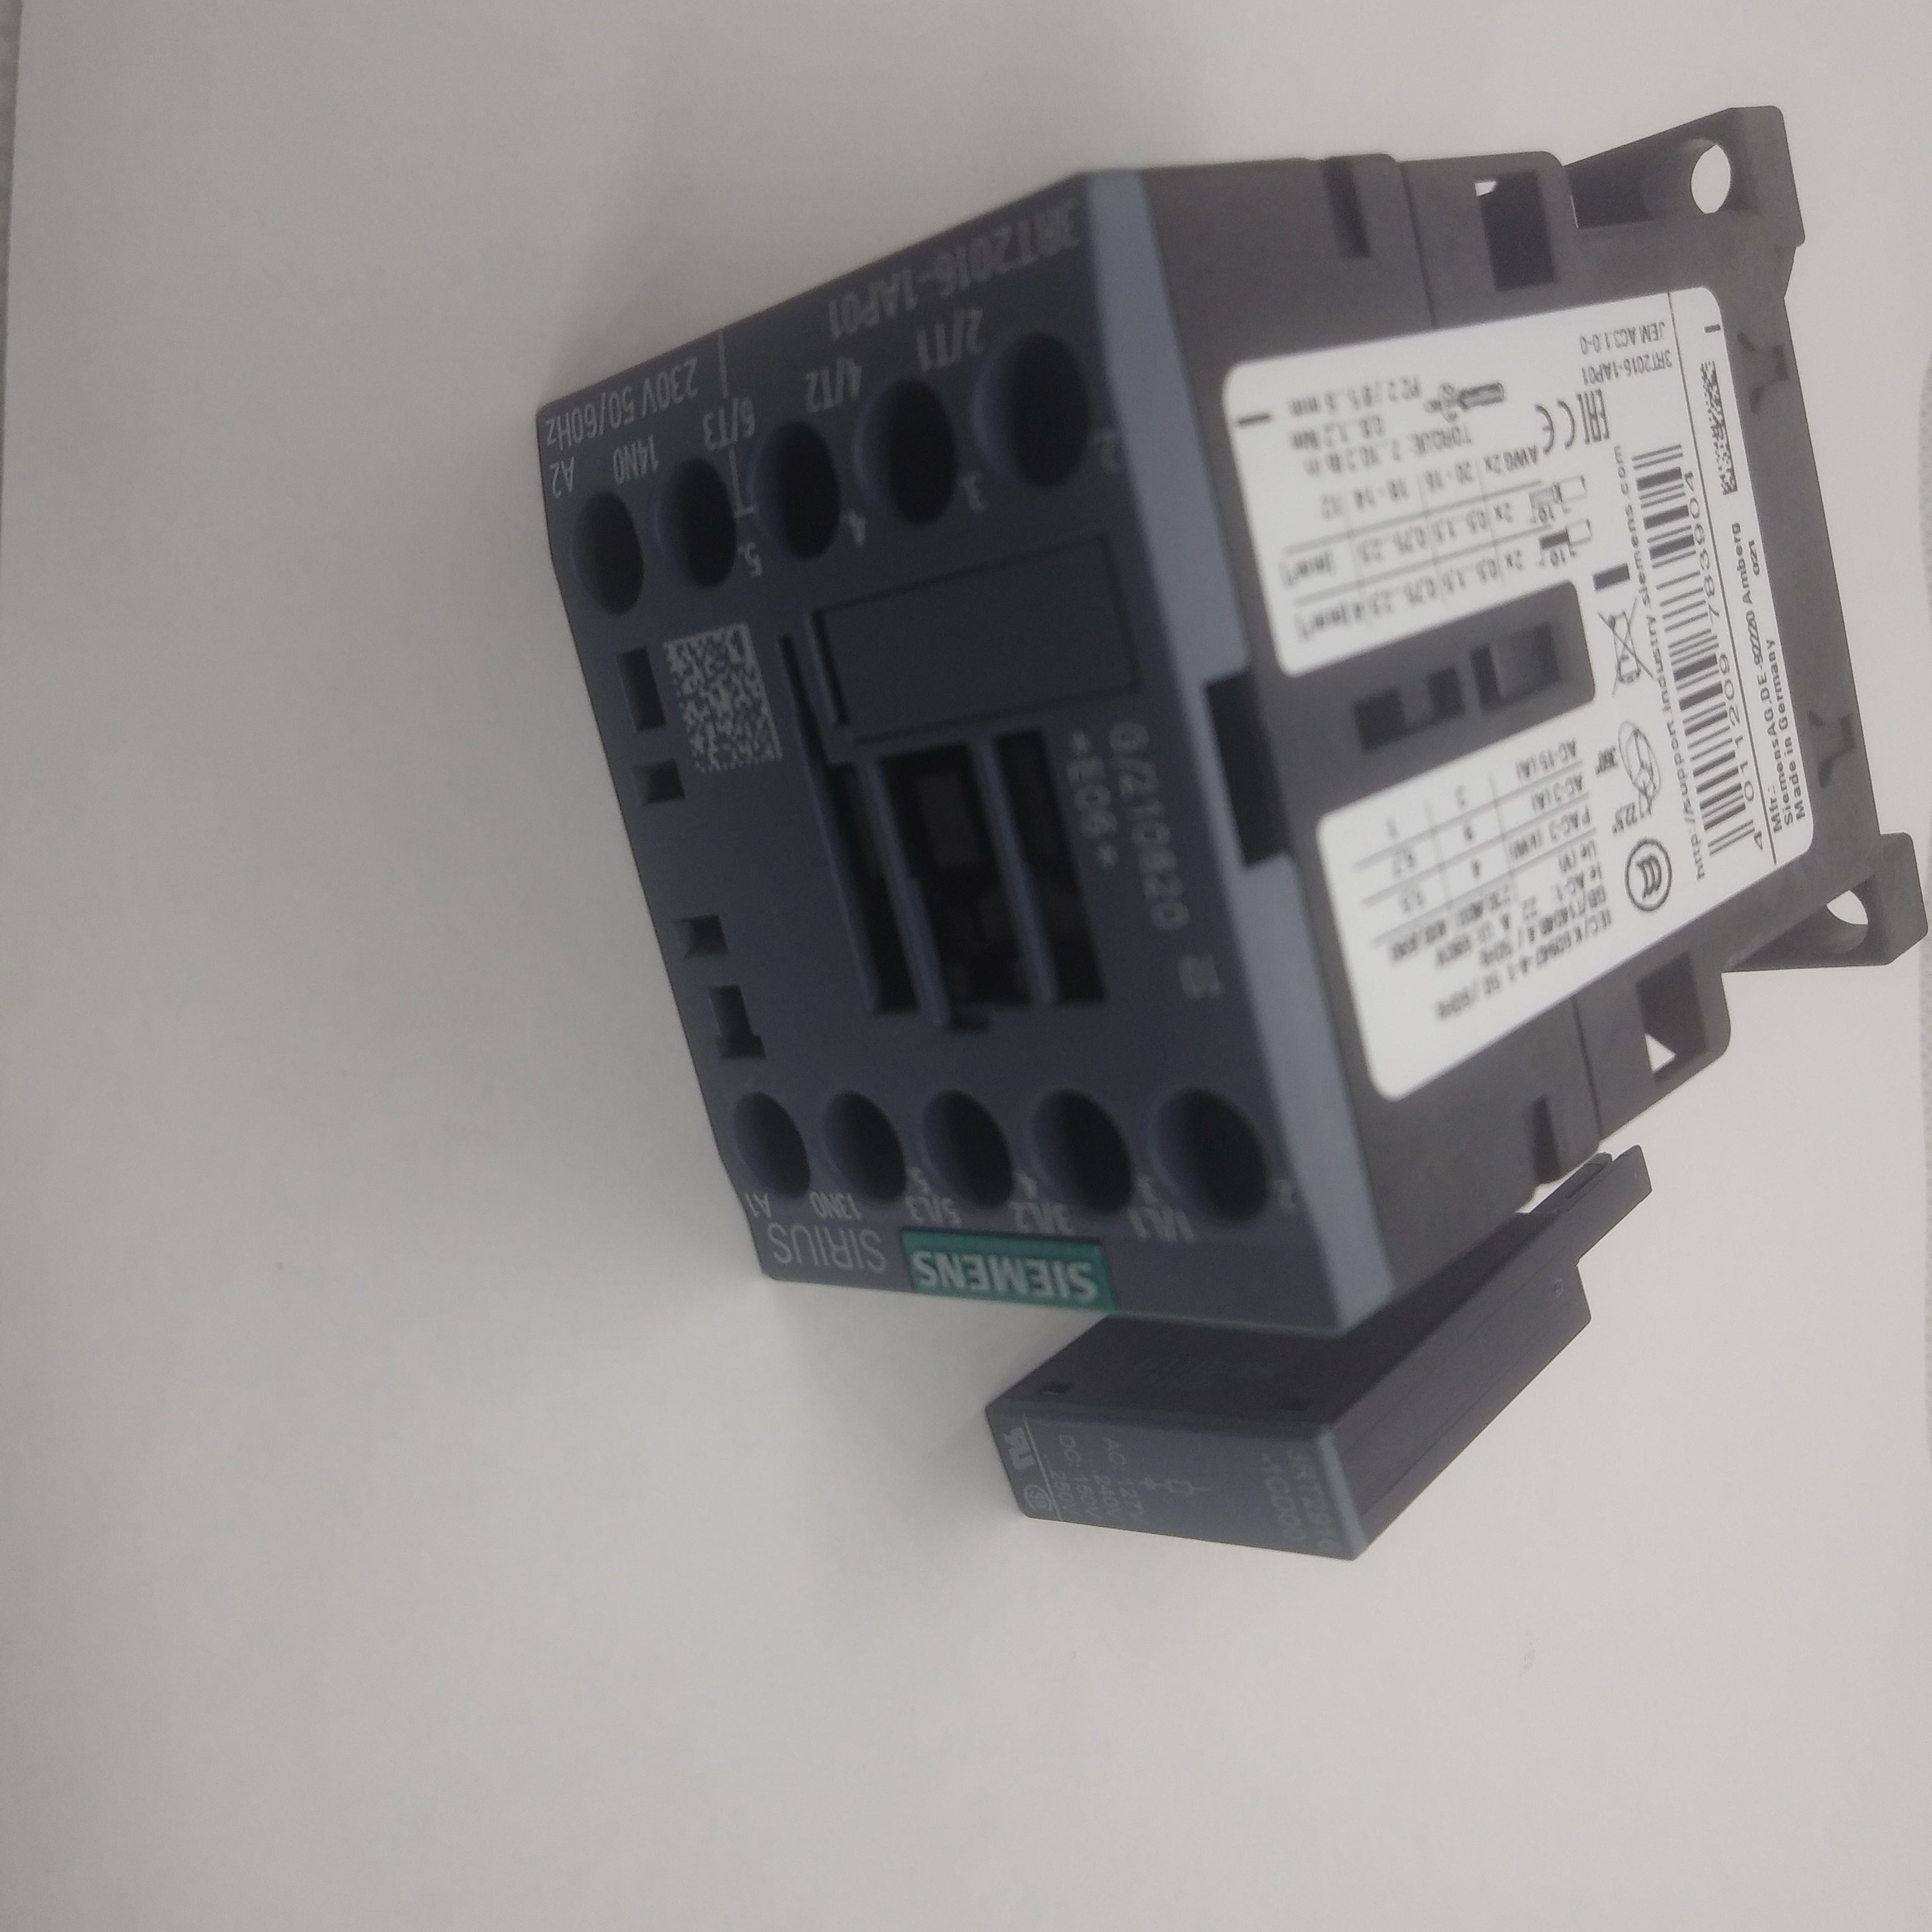 RMOR026  Contactor for Amalfi A,B,C, P120E. 20 AMPS. UL